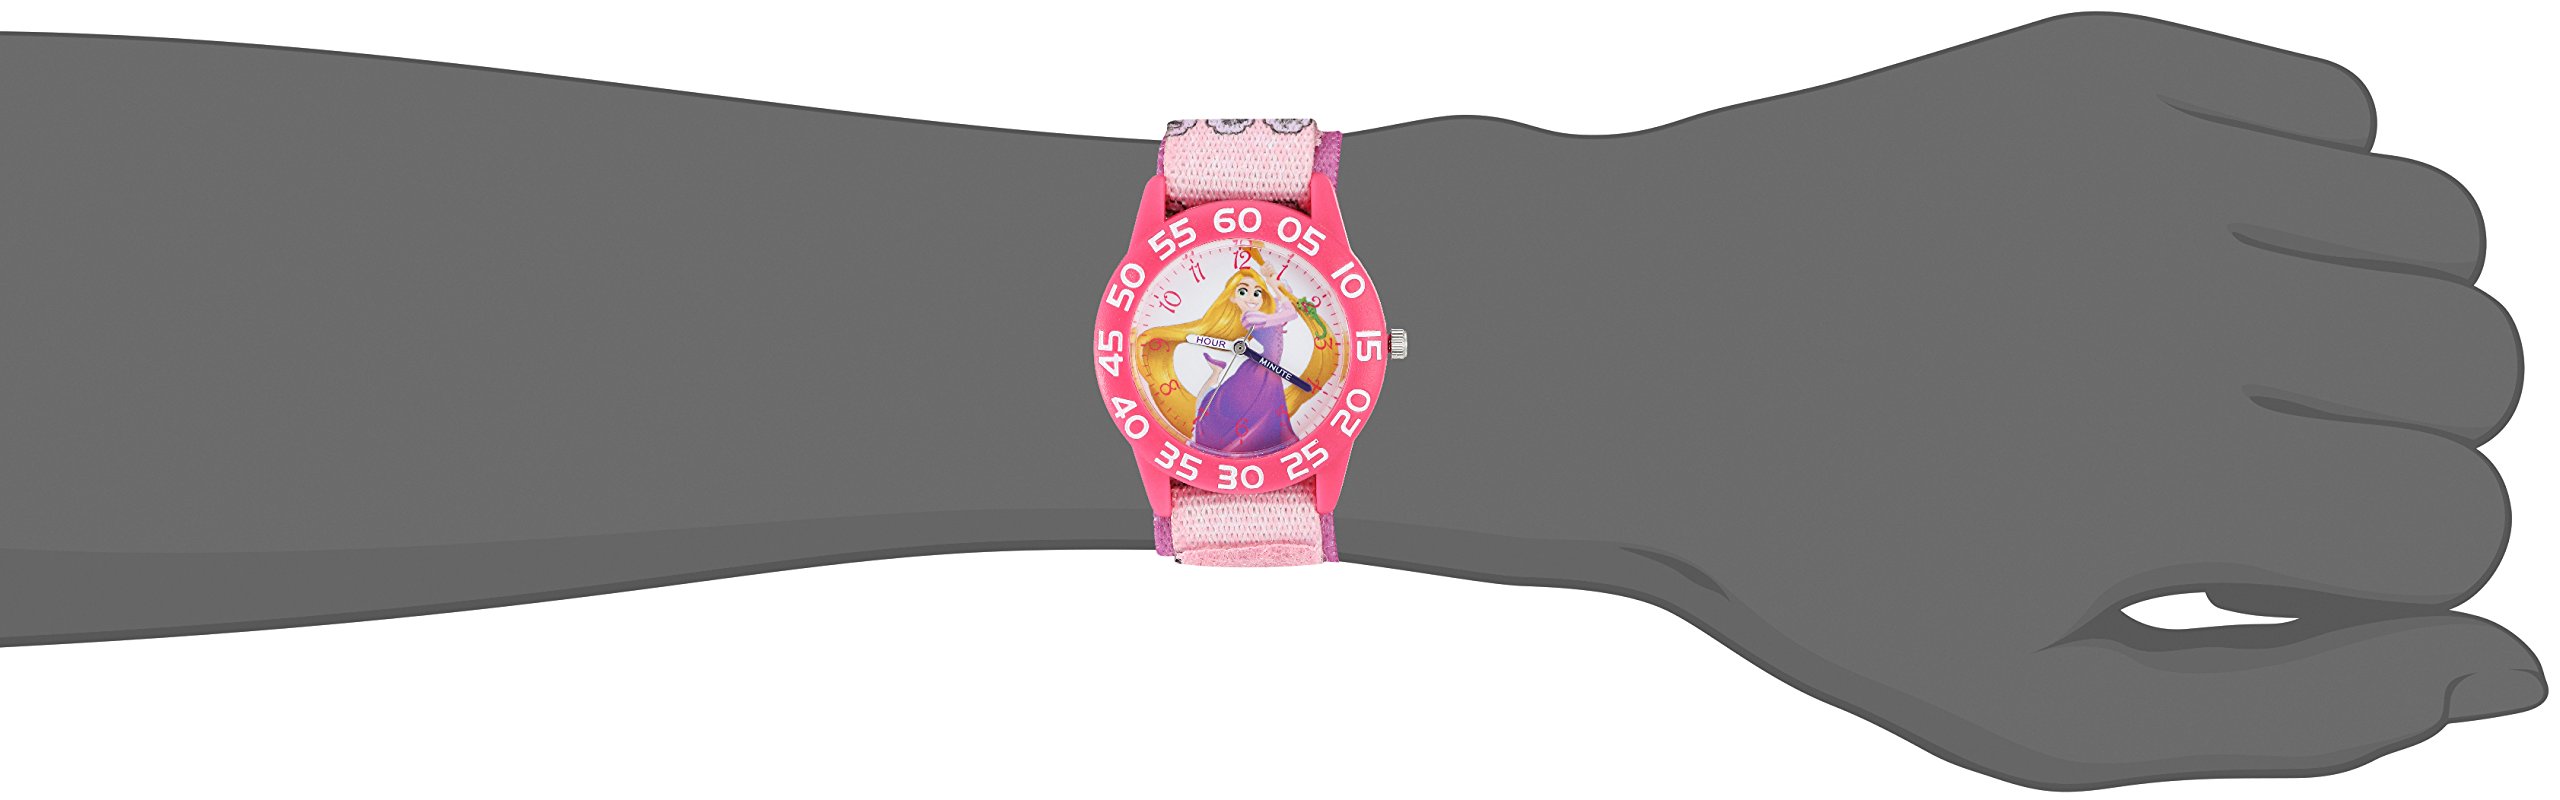 Disney Girl's 'Rapunzel' Quartz Plastic and Nylon Watch, Color:Purple (Model: W002967)